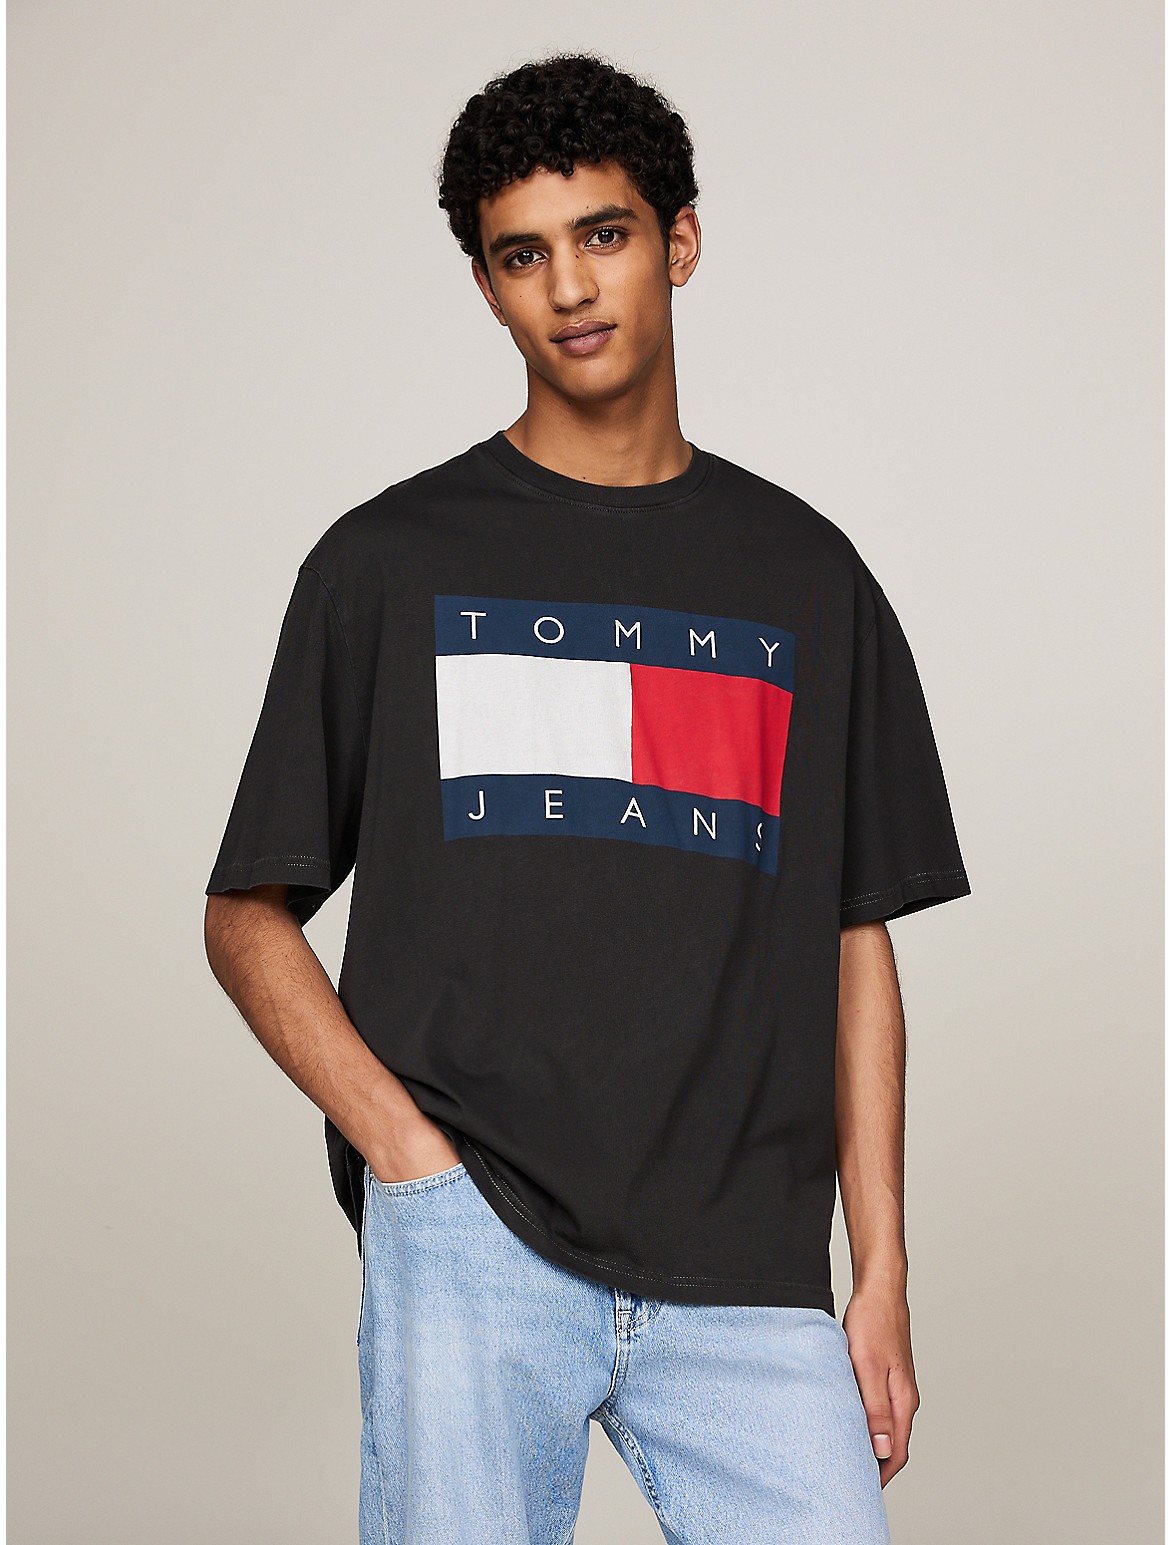 Tommy Hilfiger Men's Oversized Fit TJ Flag Graphic T-Shirt